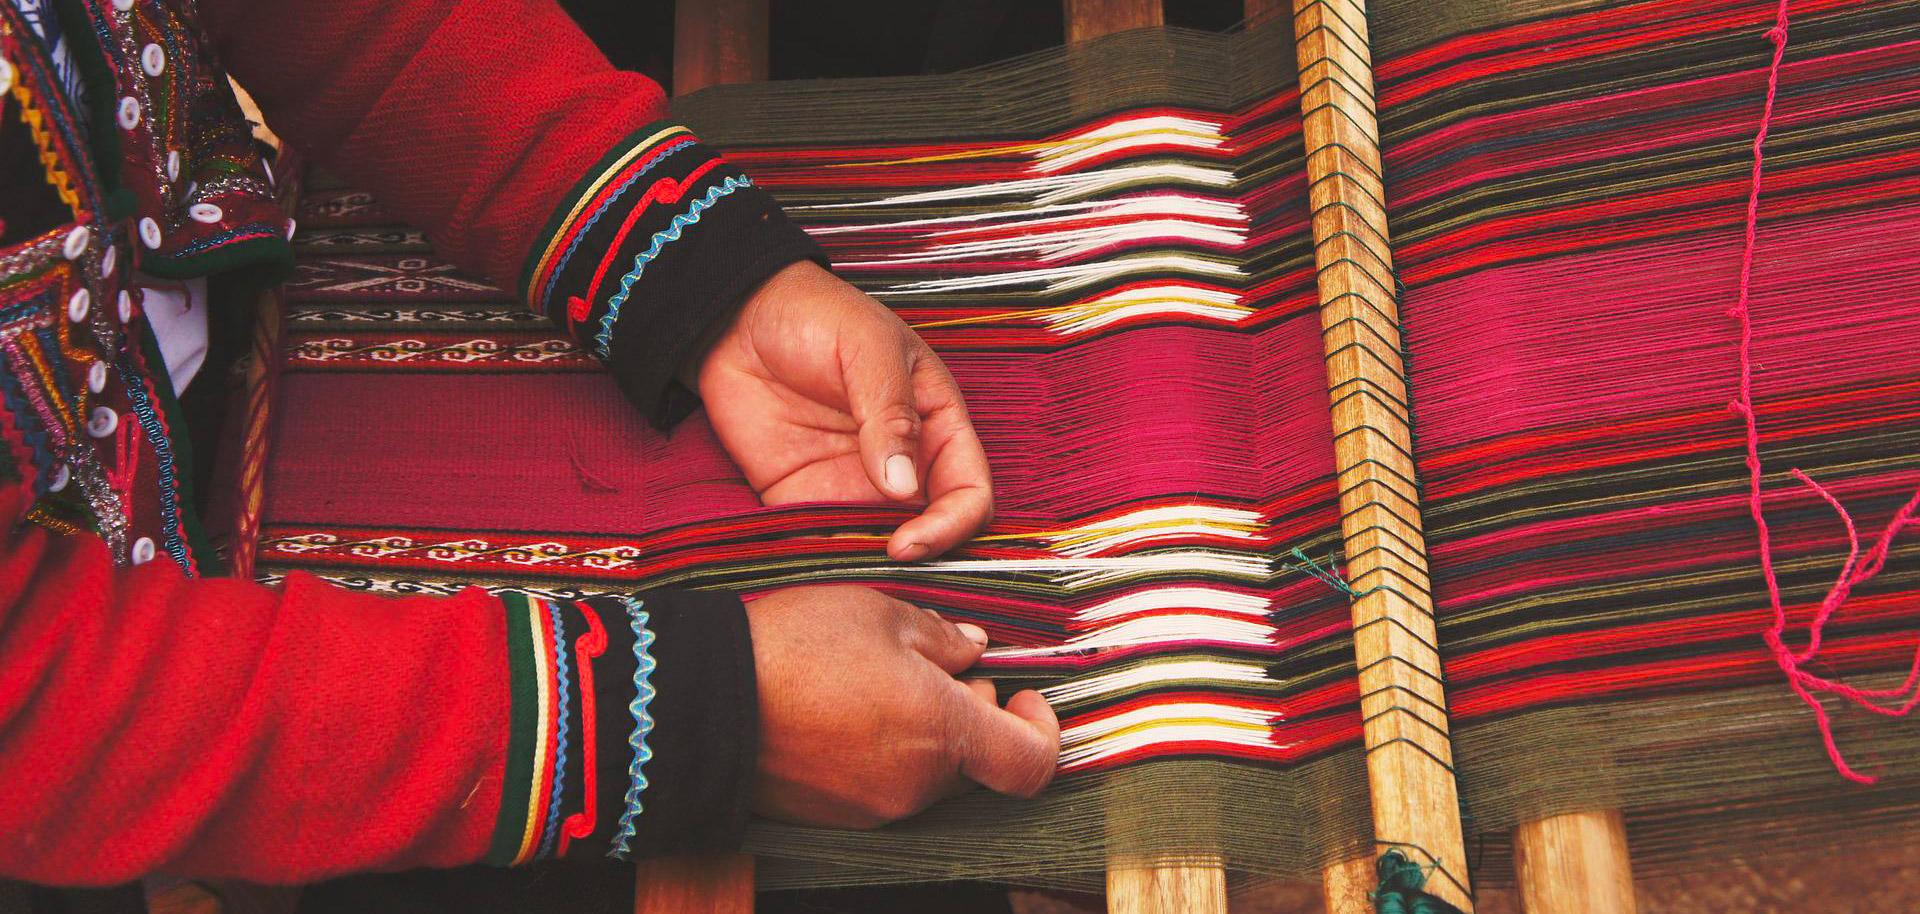 craftman loom